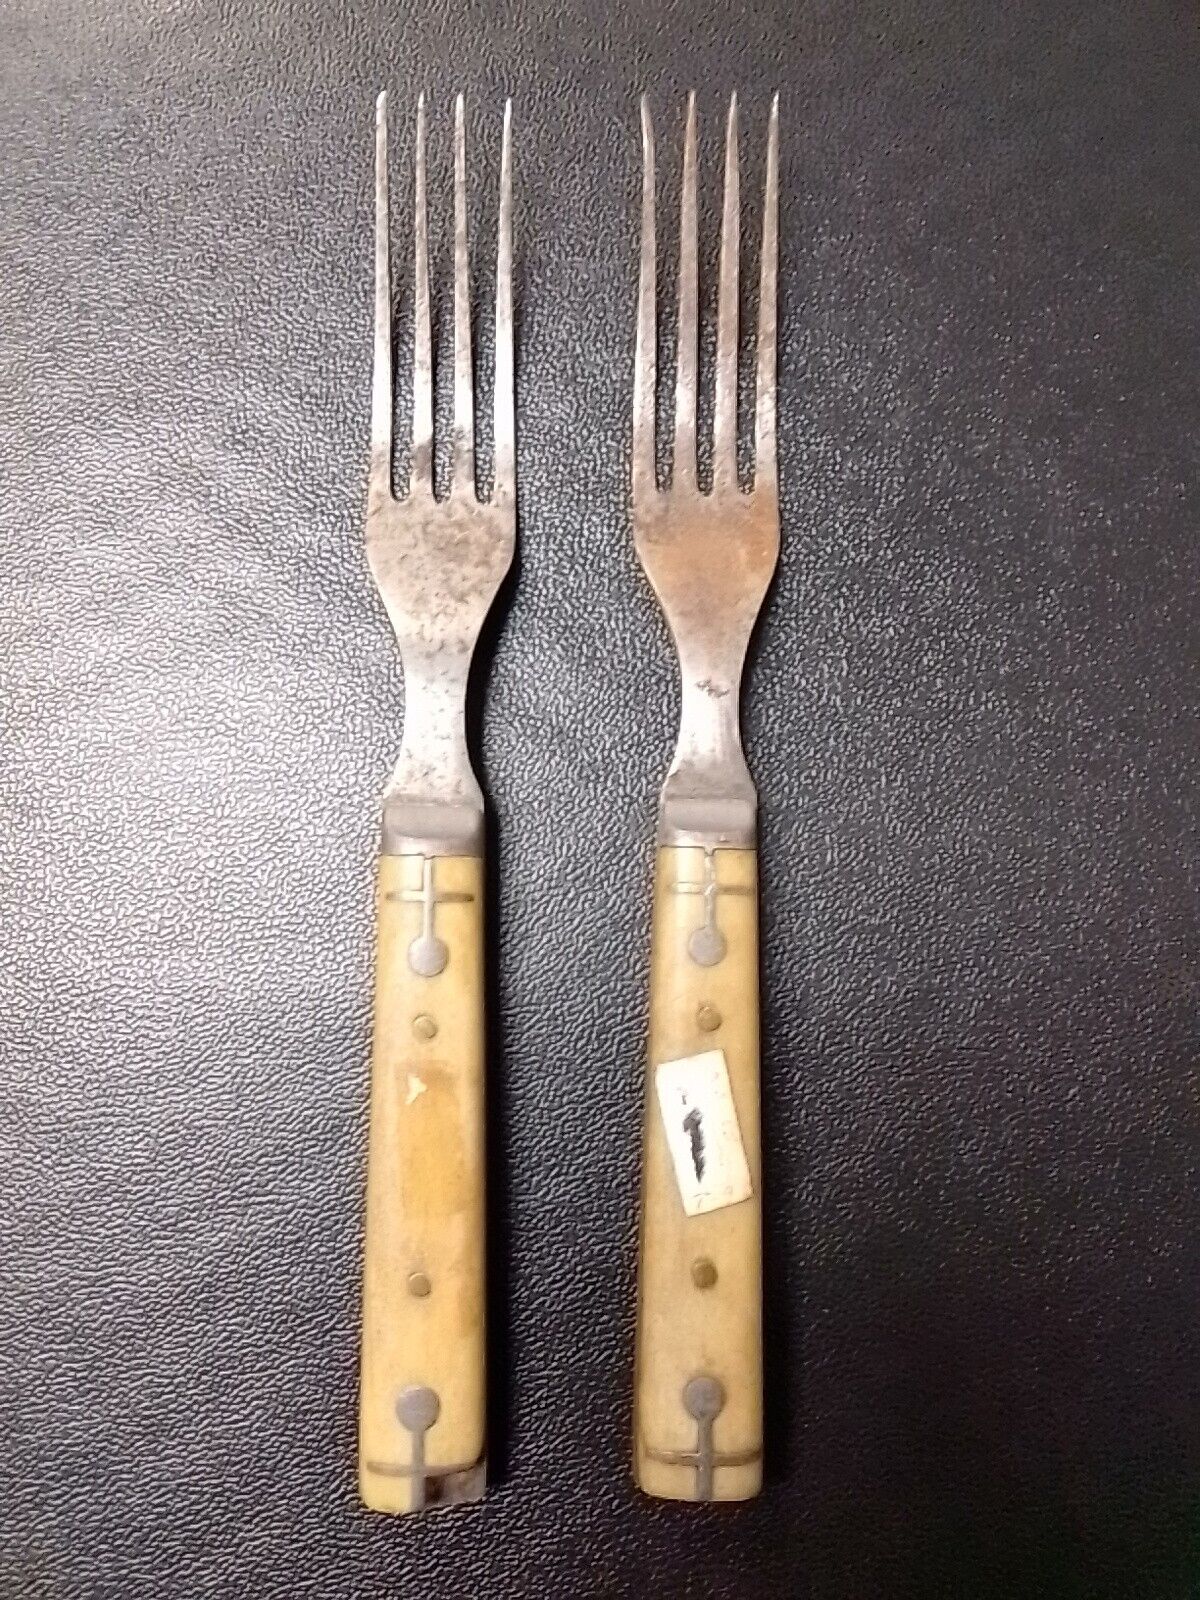 As-is Chipped Antique Or Vintage War Era Forks